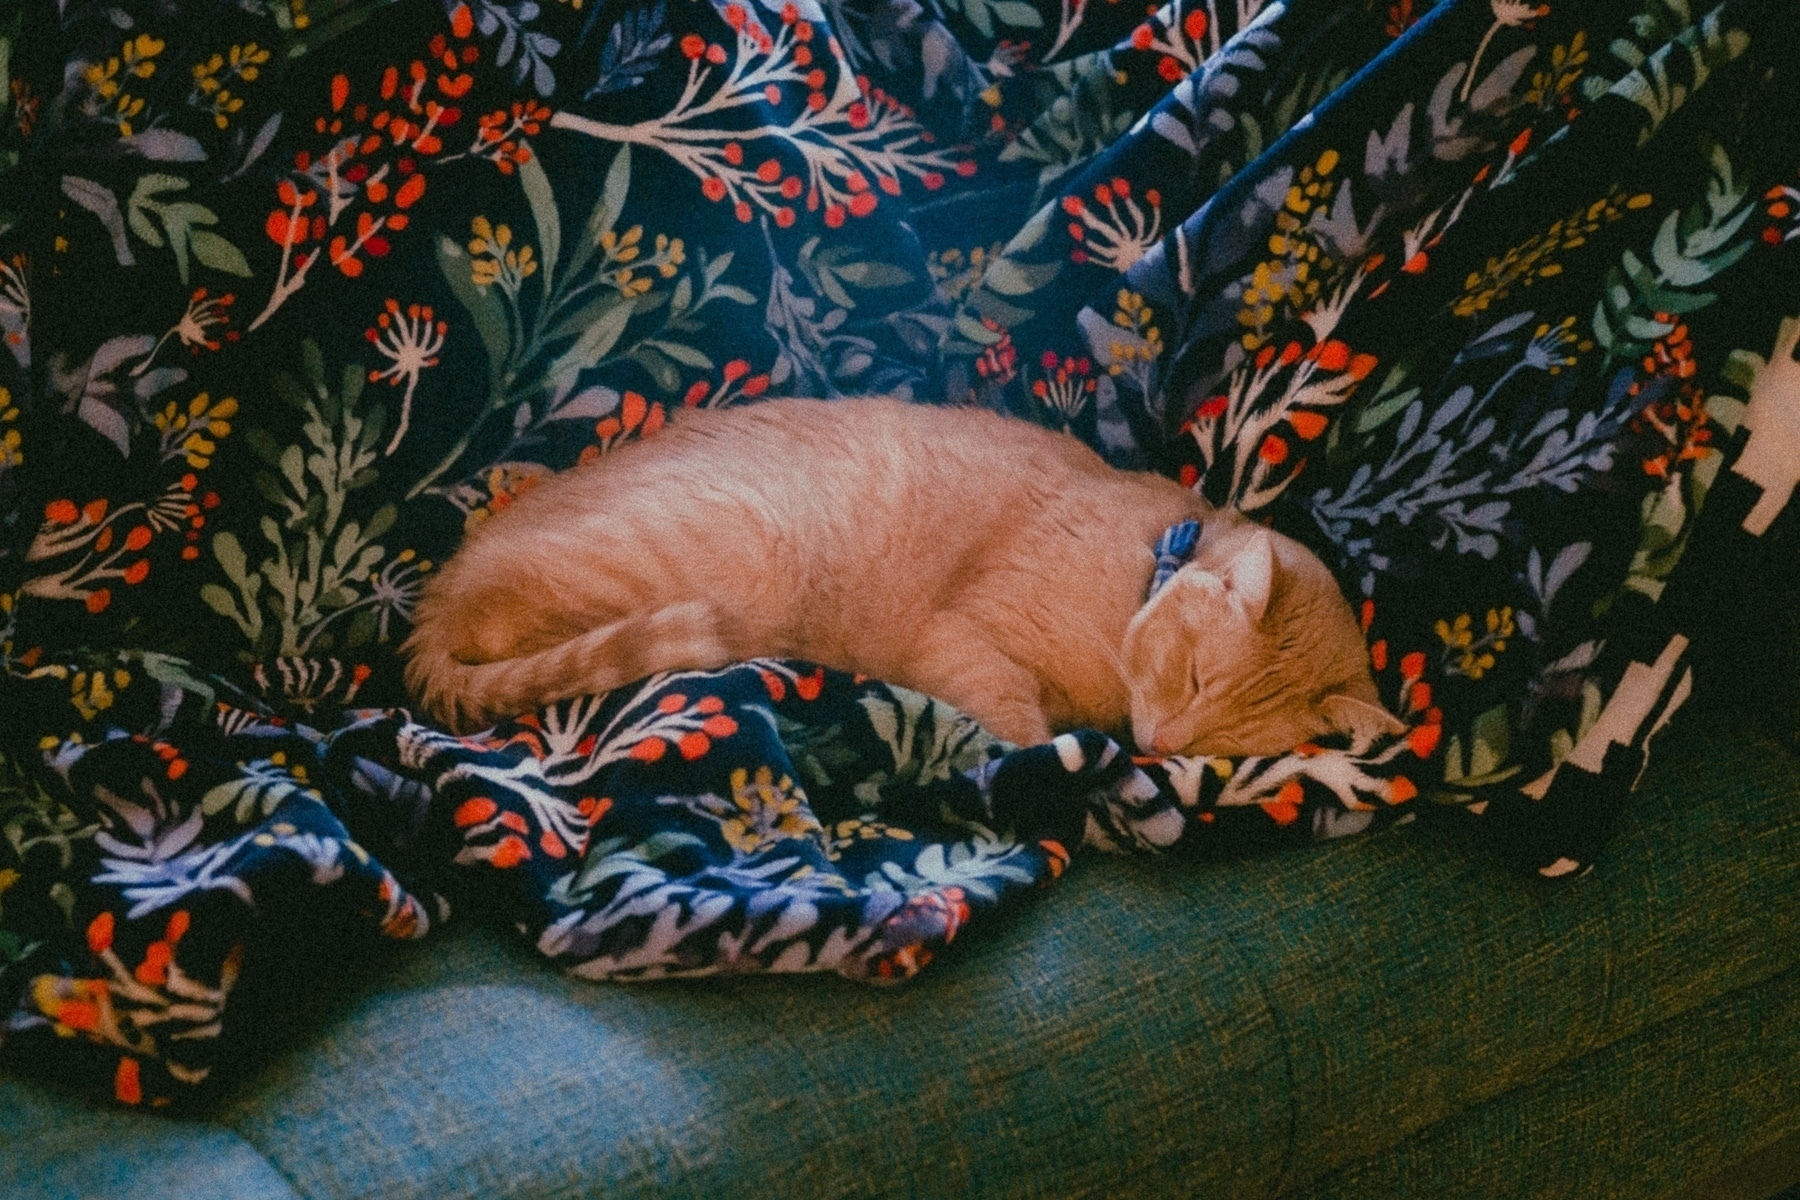 Momo (a buff tabby cat) sleeps on a colorful blanket on a greenish blue sofa.